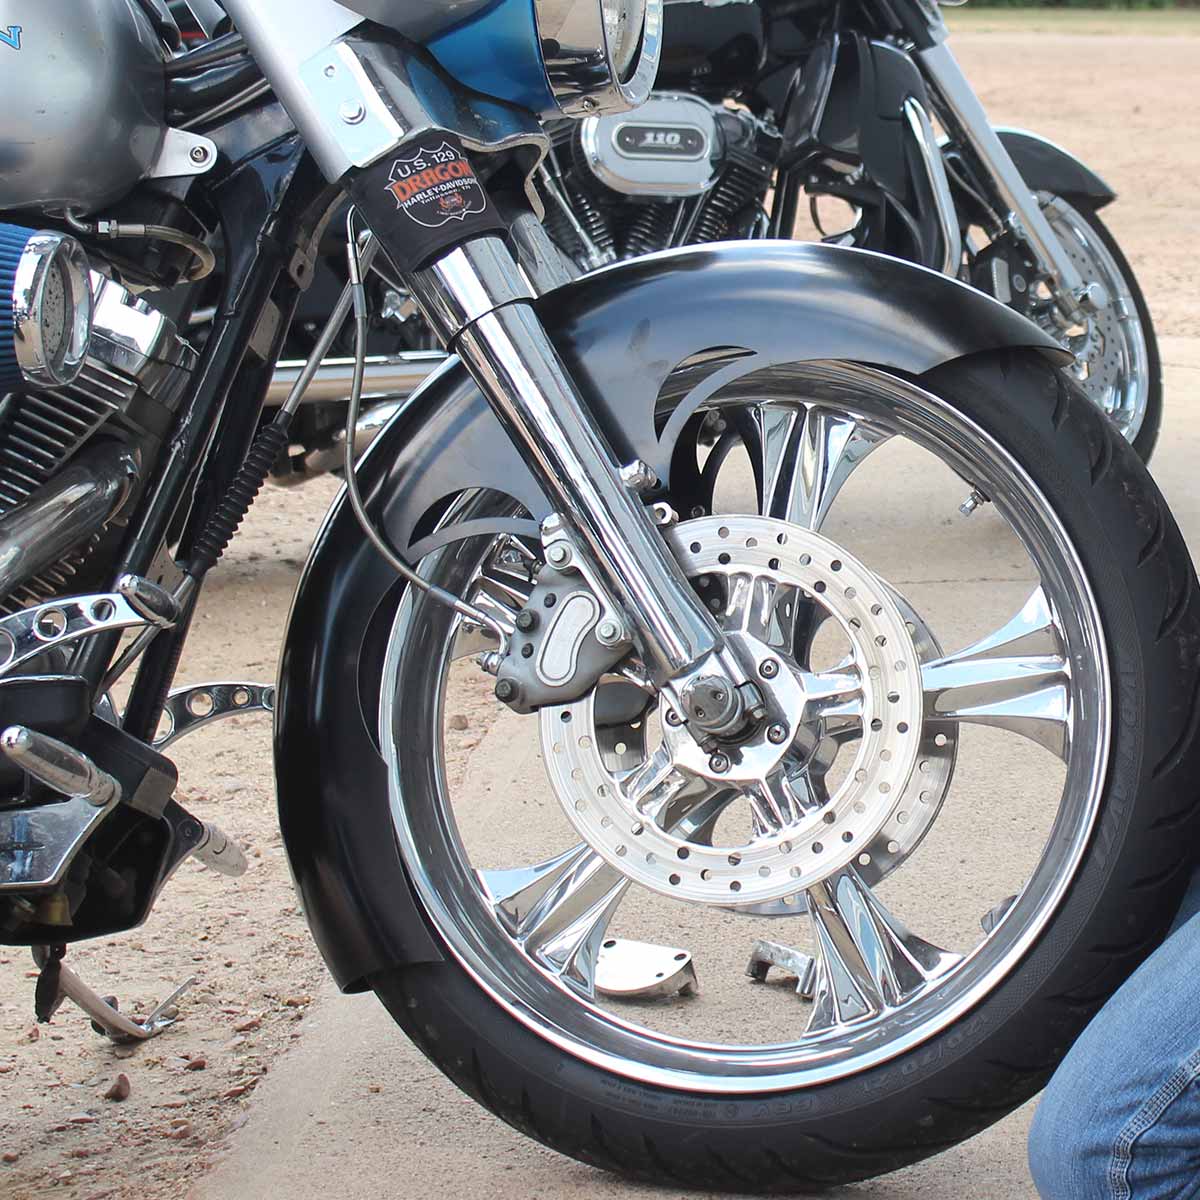 21" Tude Tire Hugger Front Fenders for Harley-Davidson 1983-2013 Touring Motorcycle Models(21" Tude)